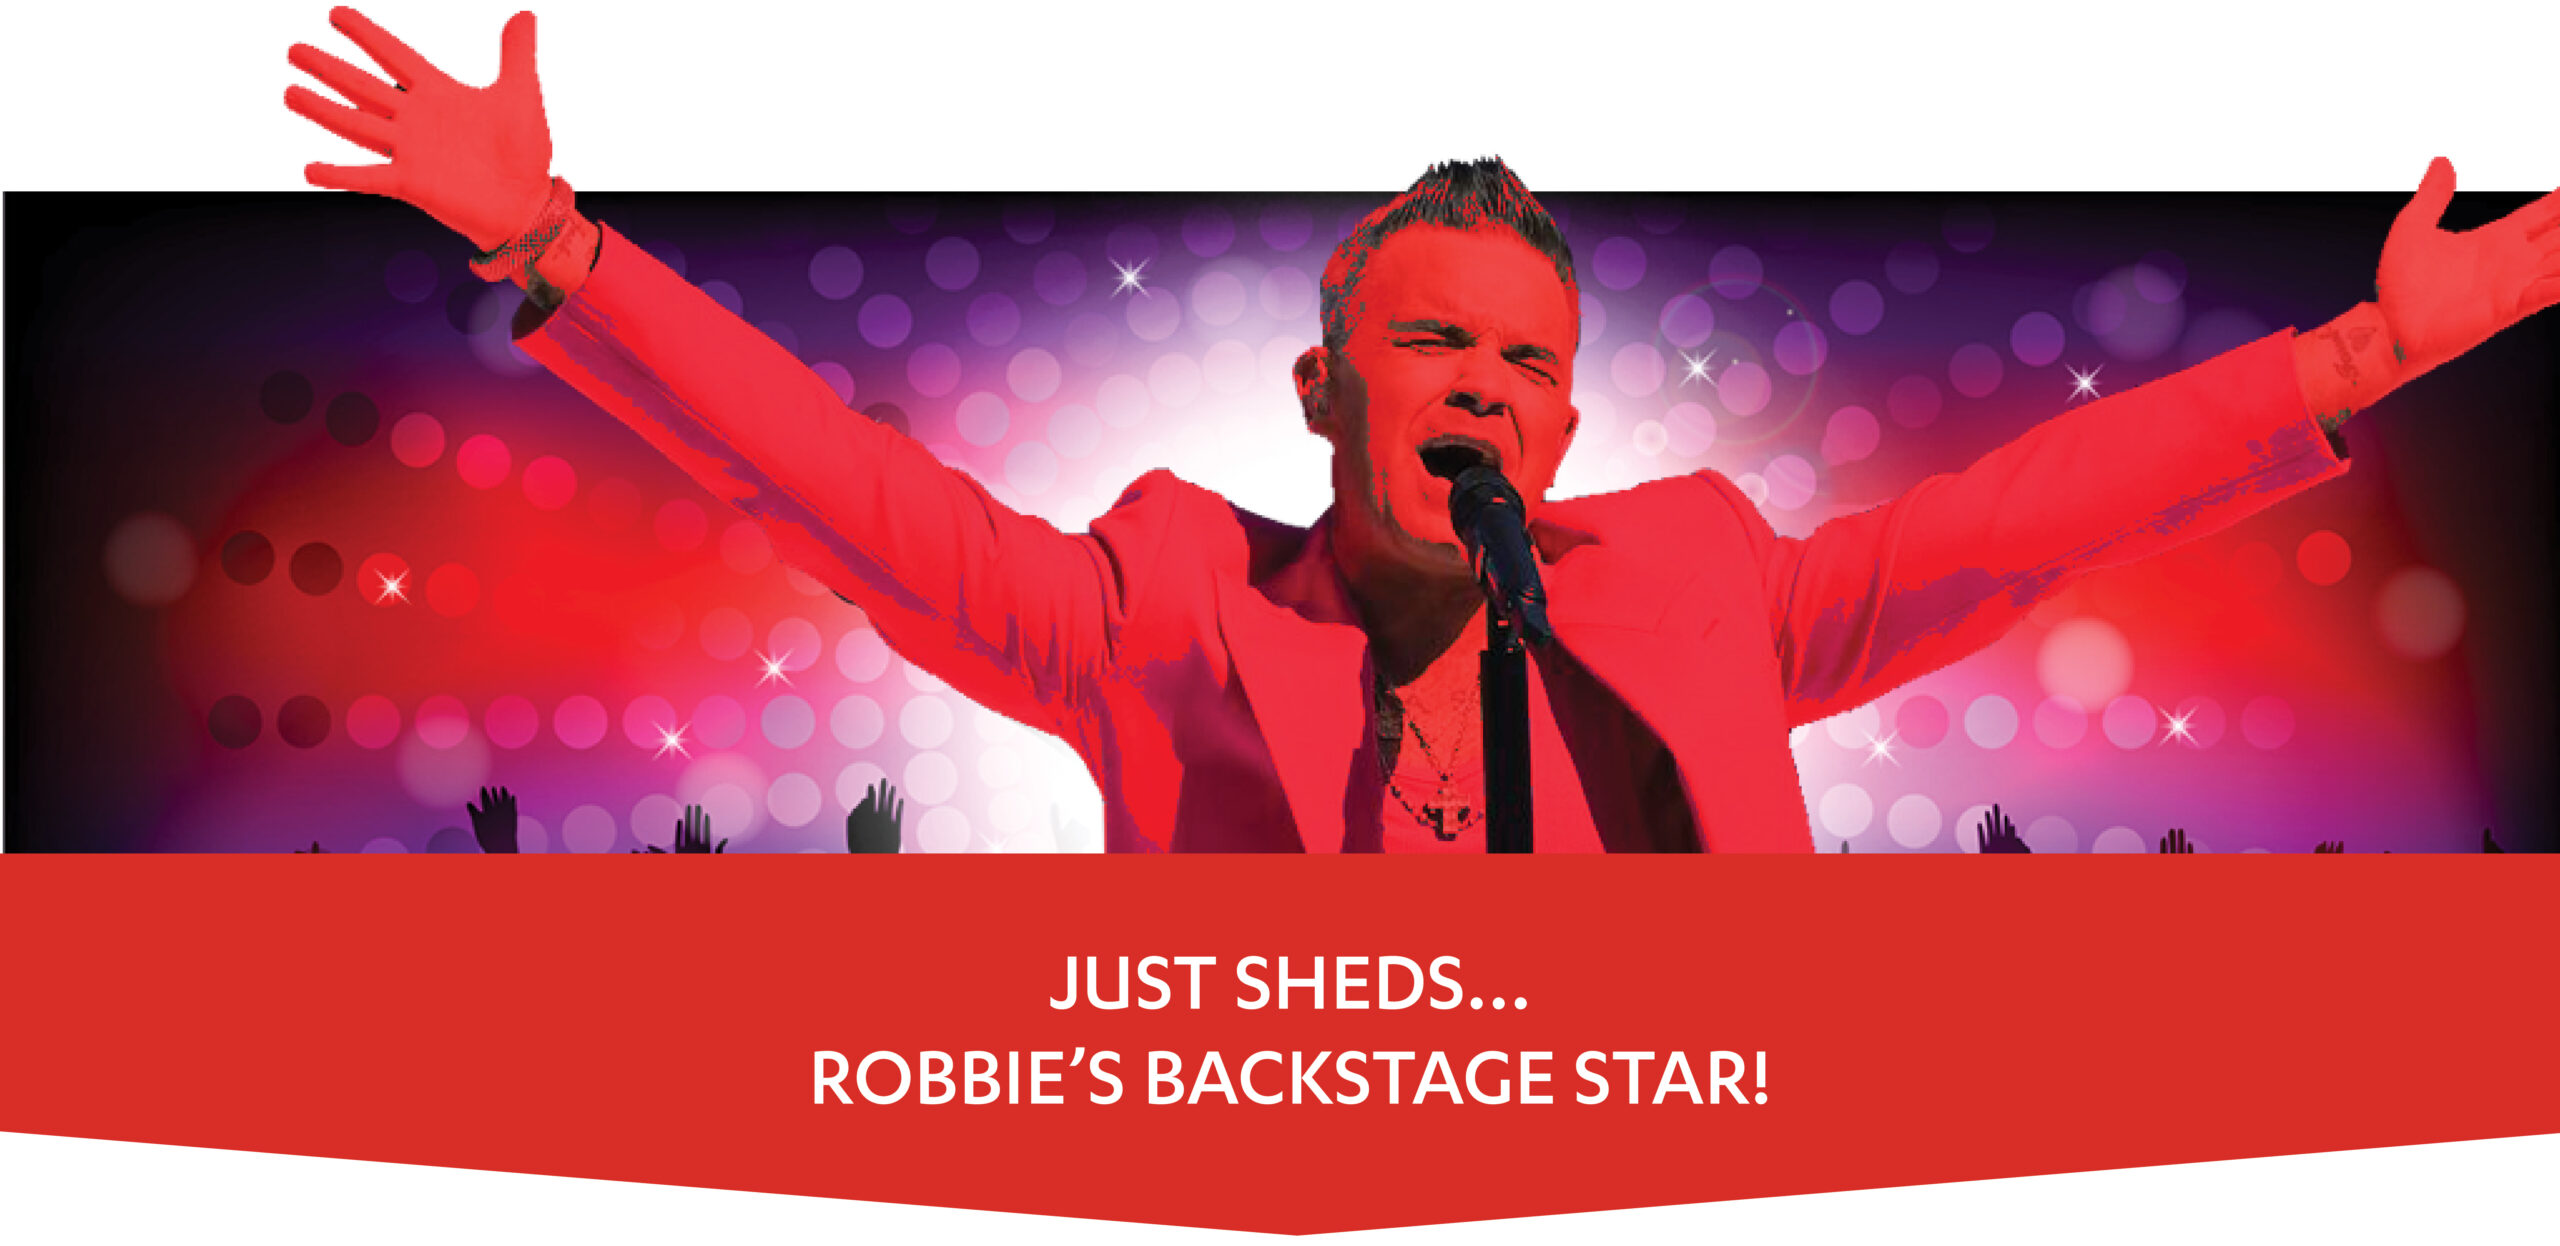 Just Sheds… Robbie’s backstage star!